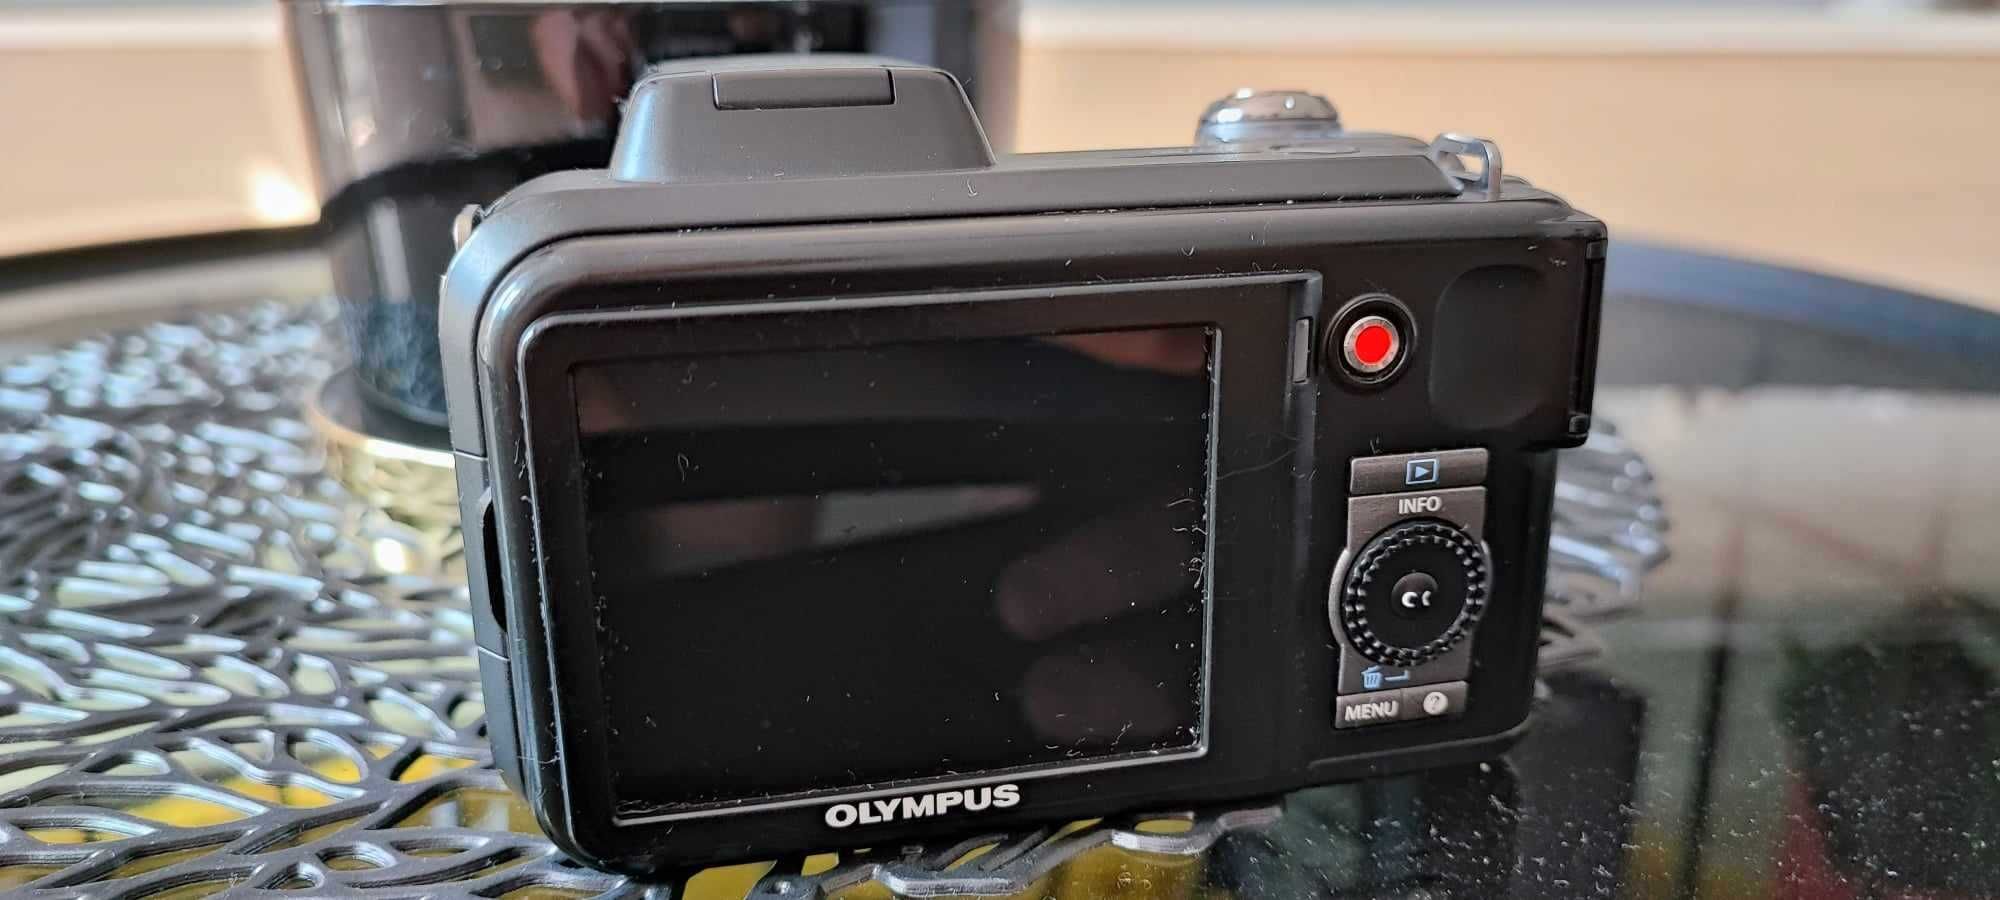 Olympus SP-600UZ 15x zoom 12MP